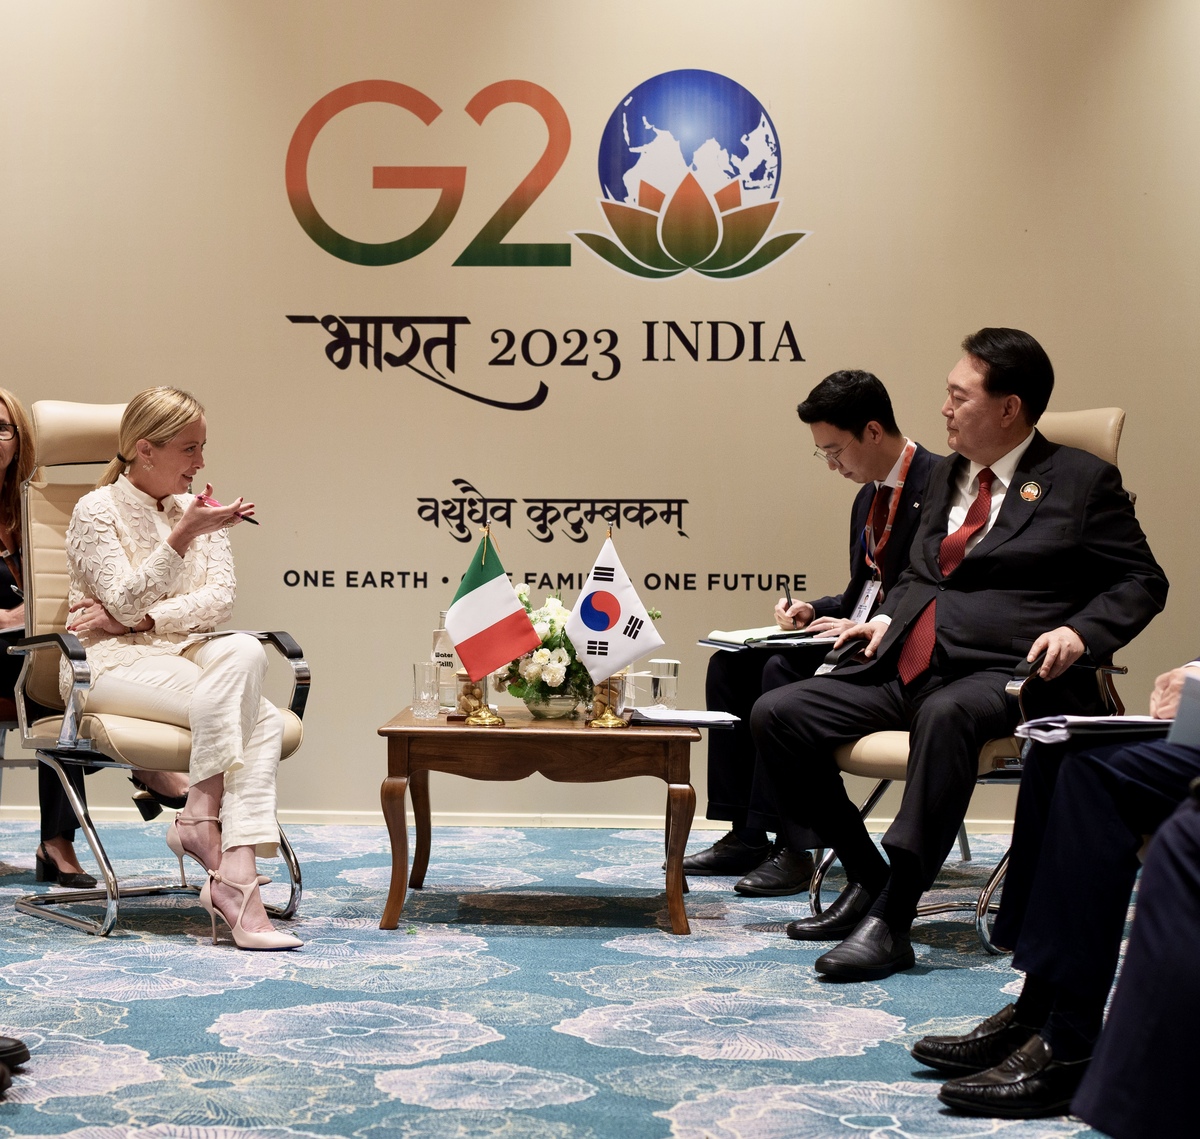 G20 in India